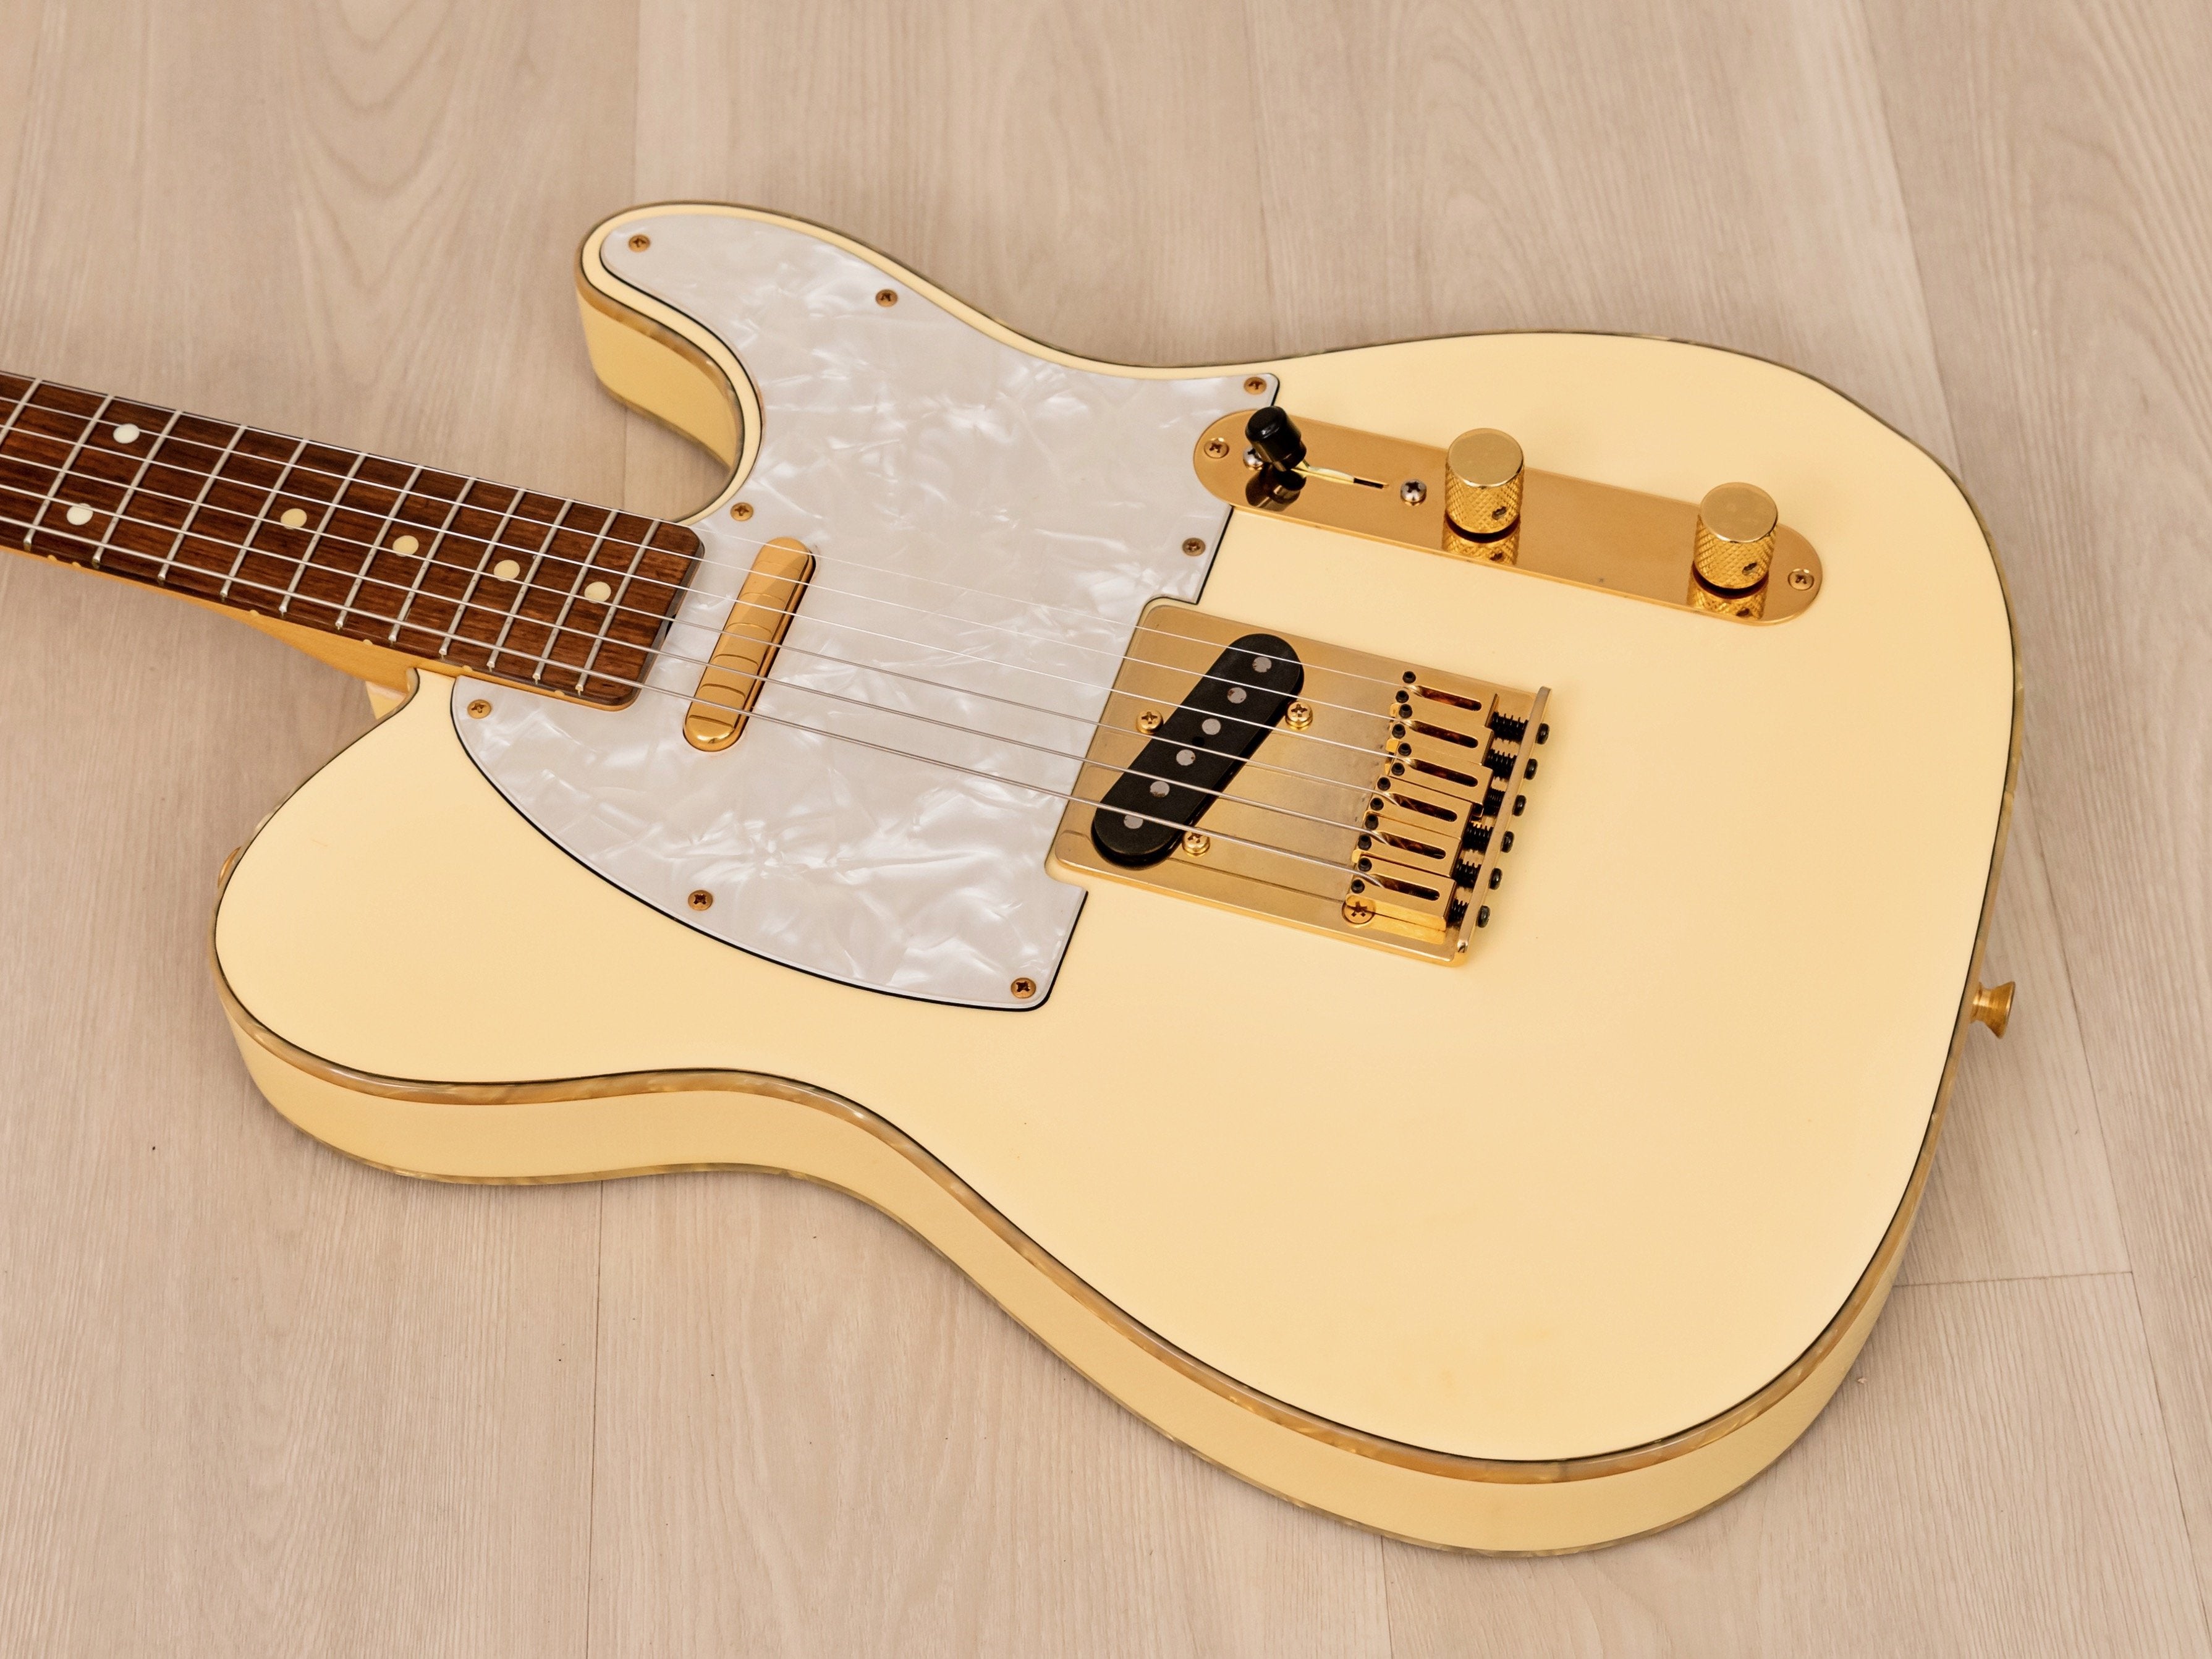 1995 Fender Telecaster Custom Limited Edition TLG94P Vintage White w/ Gold Hardware, Case, Japan MIJ